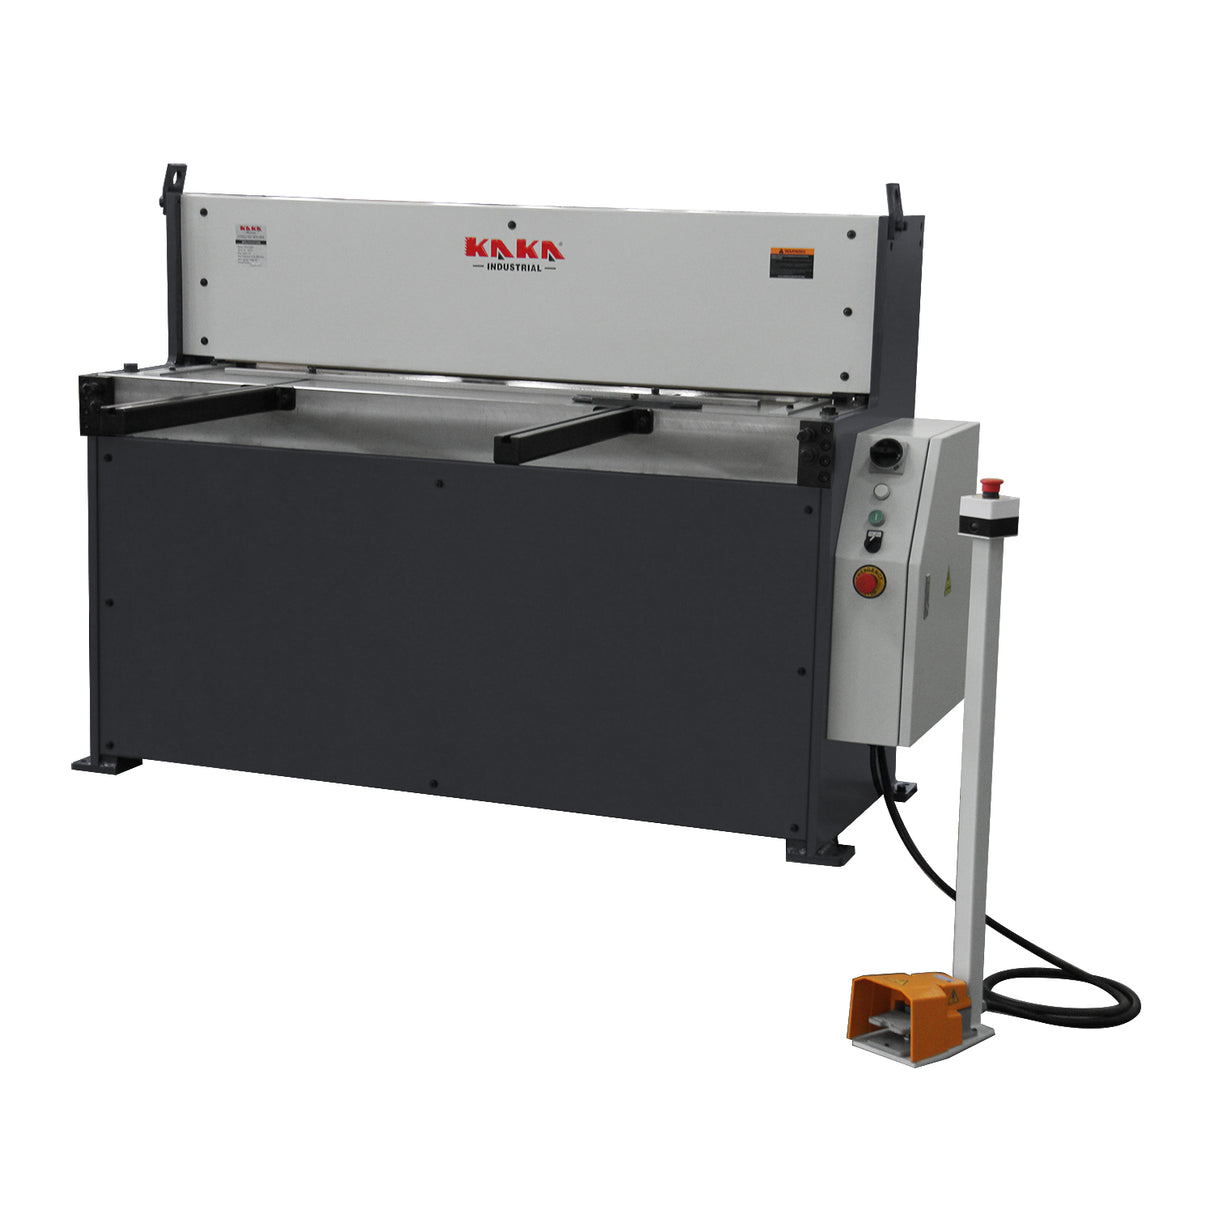 KANG Industrial THS-10008 Hydraulic Guillotine Shear, 2500x4.0 mm Mild Steel Cutting Capacity, 415V Motor